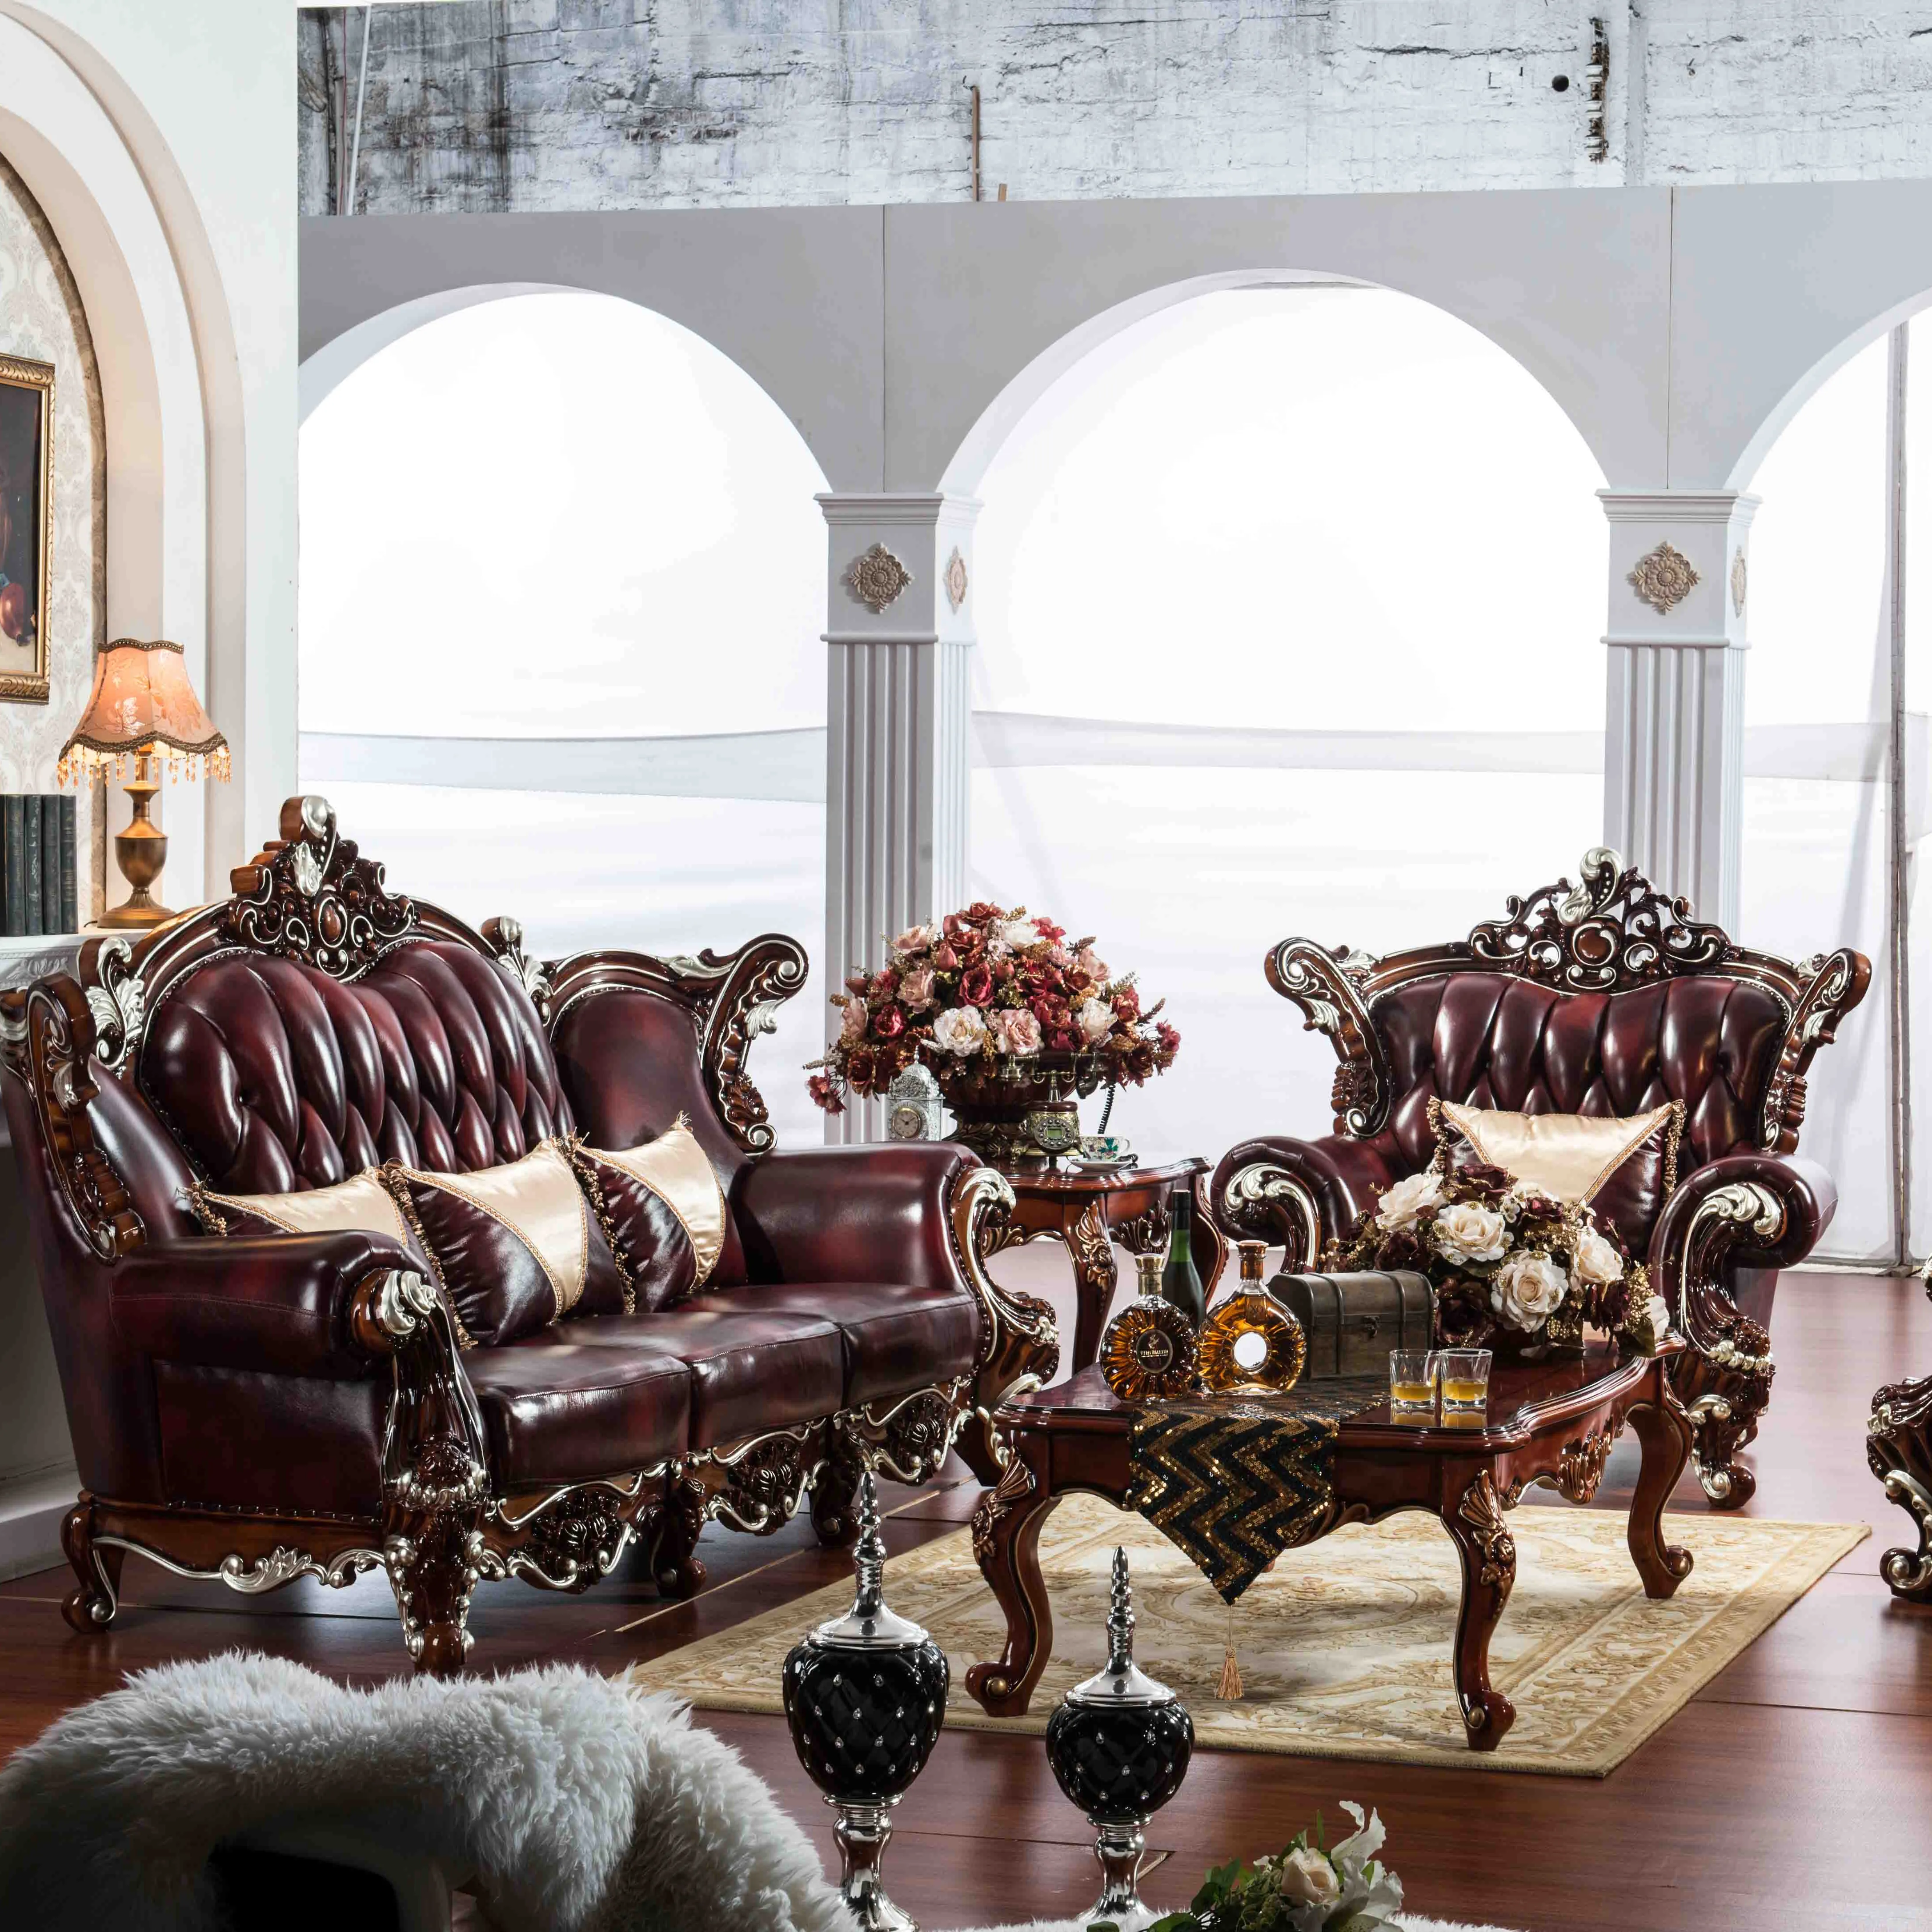 Royal Dubai Echtes Leders ofa, Wohn möbel Arabisches Sofa Antikes Holzset Schnitts ofa im europäischen Stil 1Set 25-30 Tage